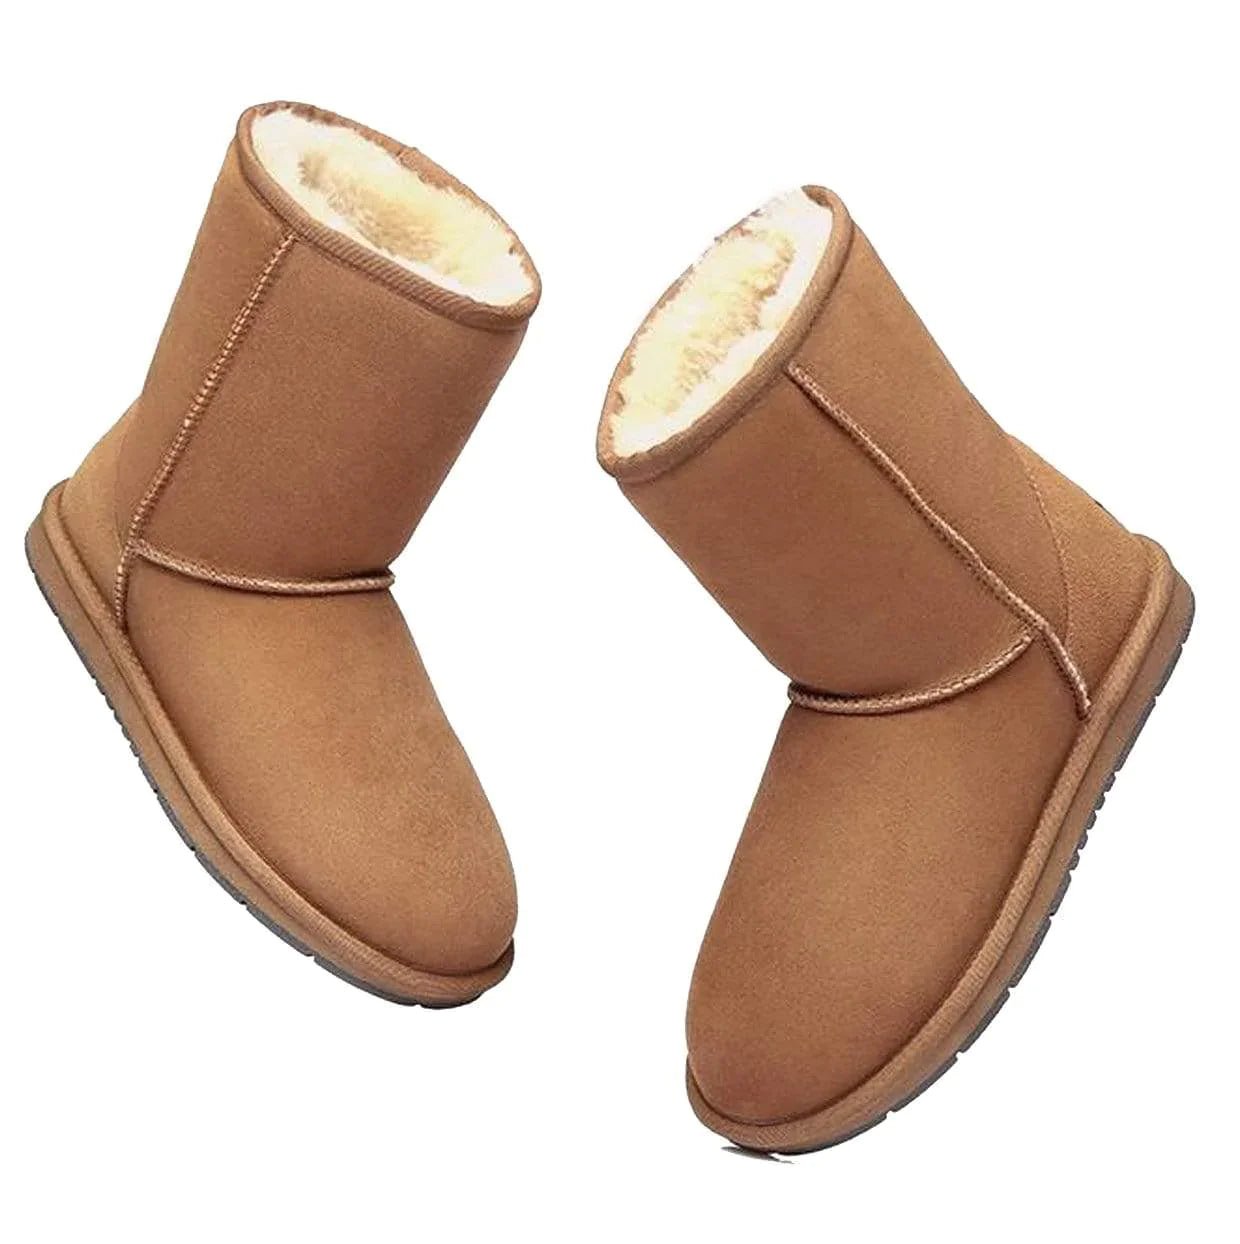 UGG Premium Suede Short Boots